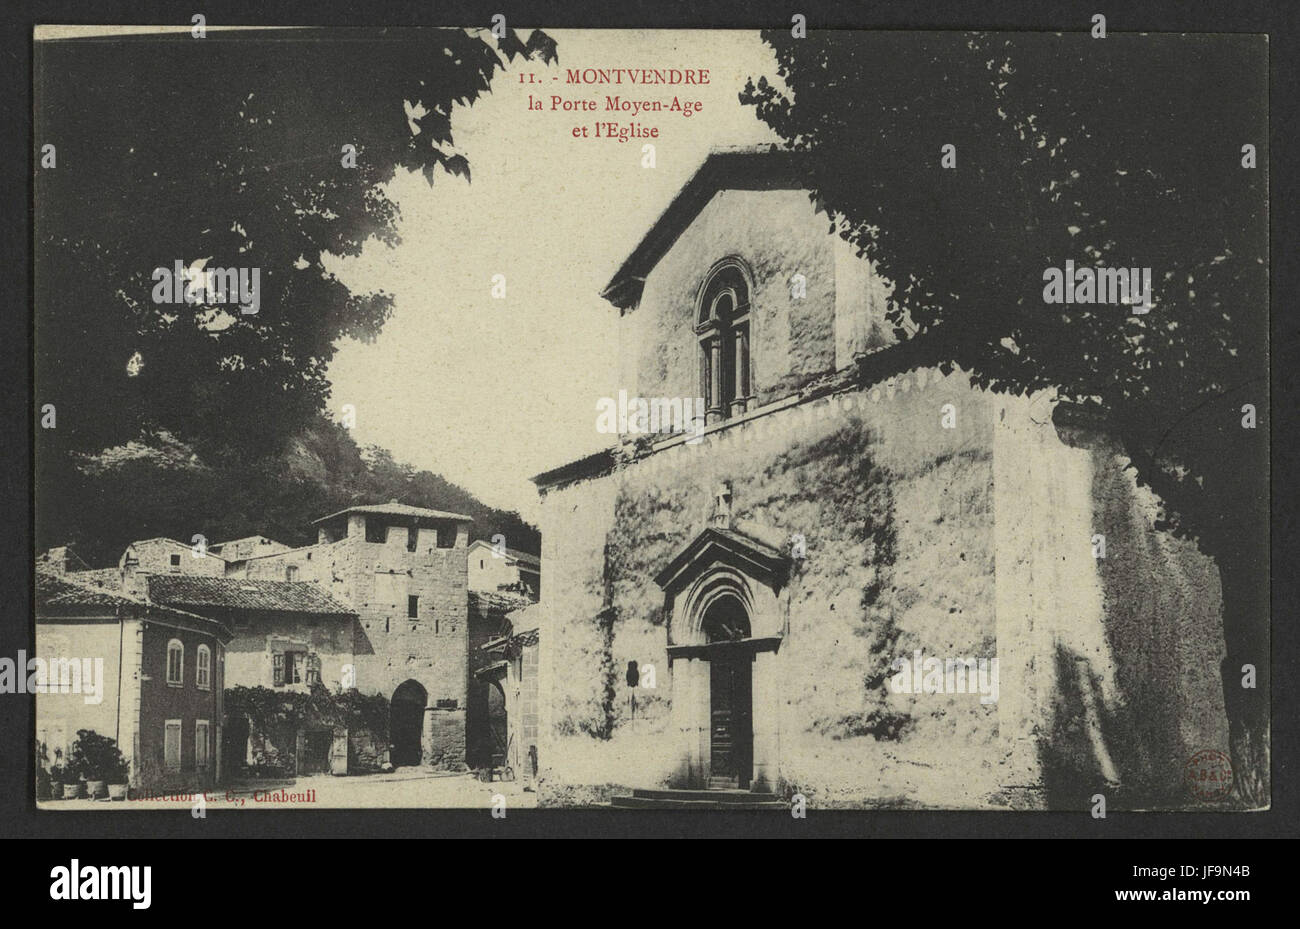 Montvendre - La porte moyen age et l'Eglise 34184151950 o Stock Photo